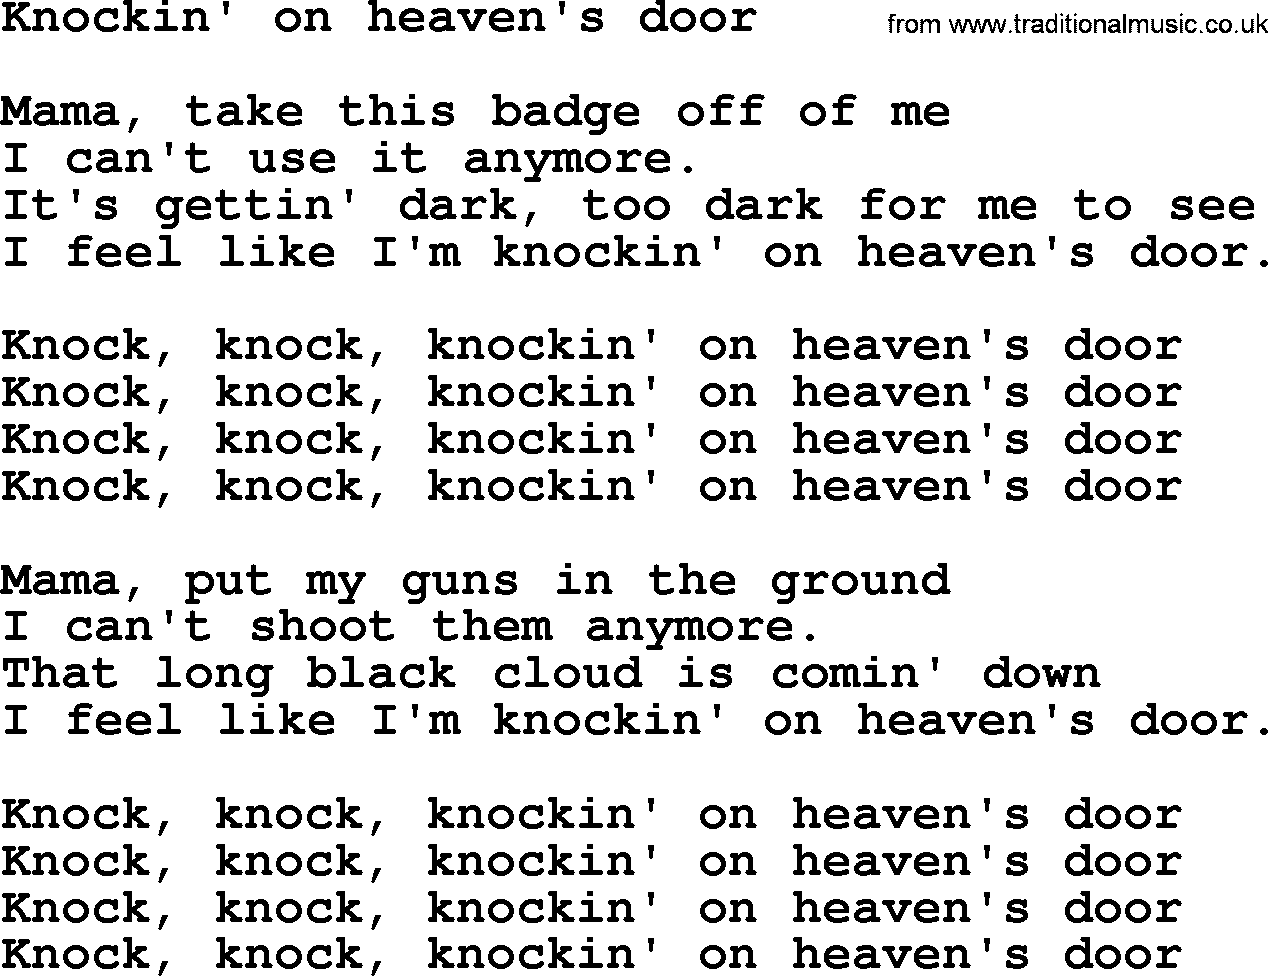 knockin on heavens door - lyrics